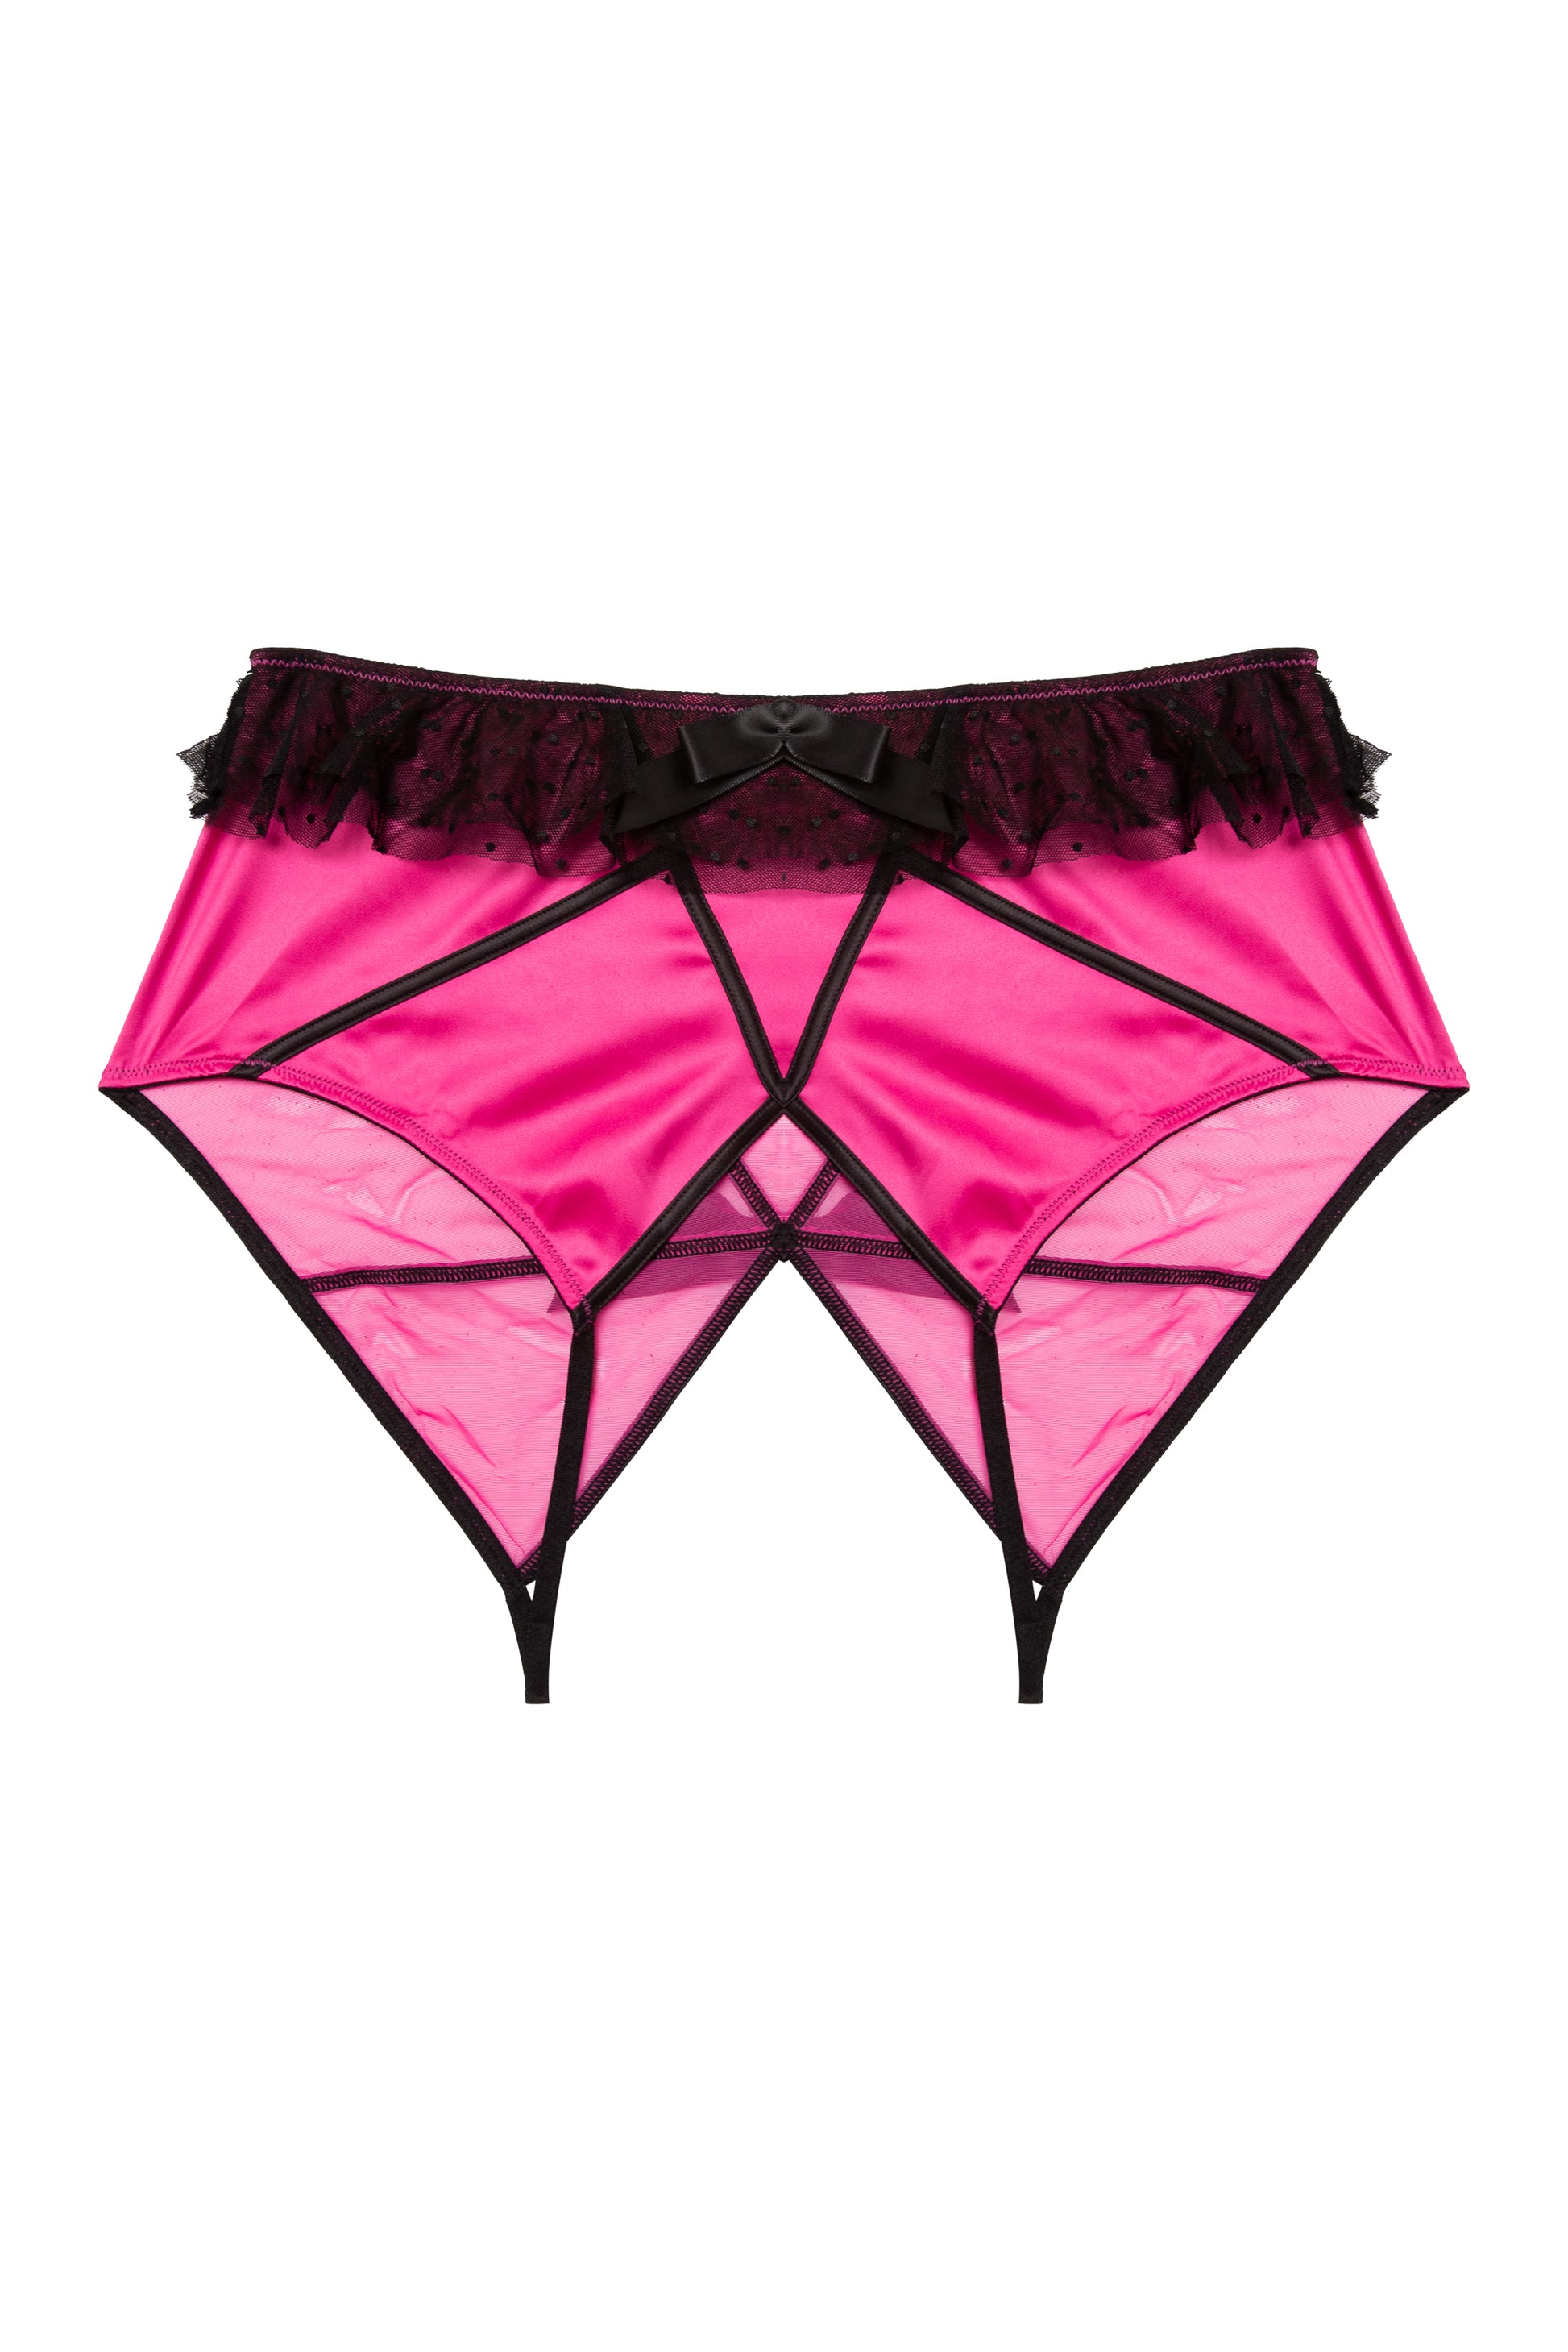 Pink Crotchless Panties - Bettie Page - Toronto Lingerie - Gigi's